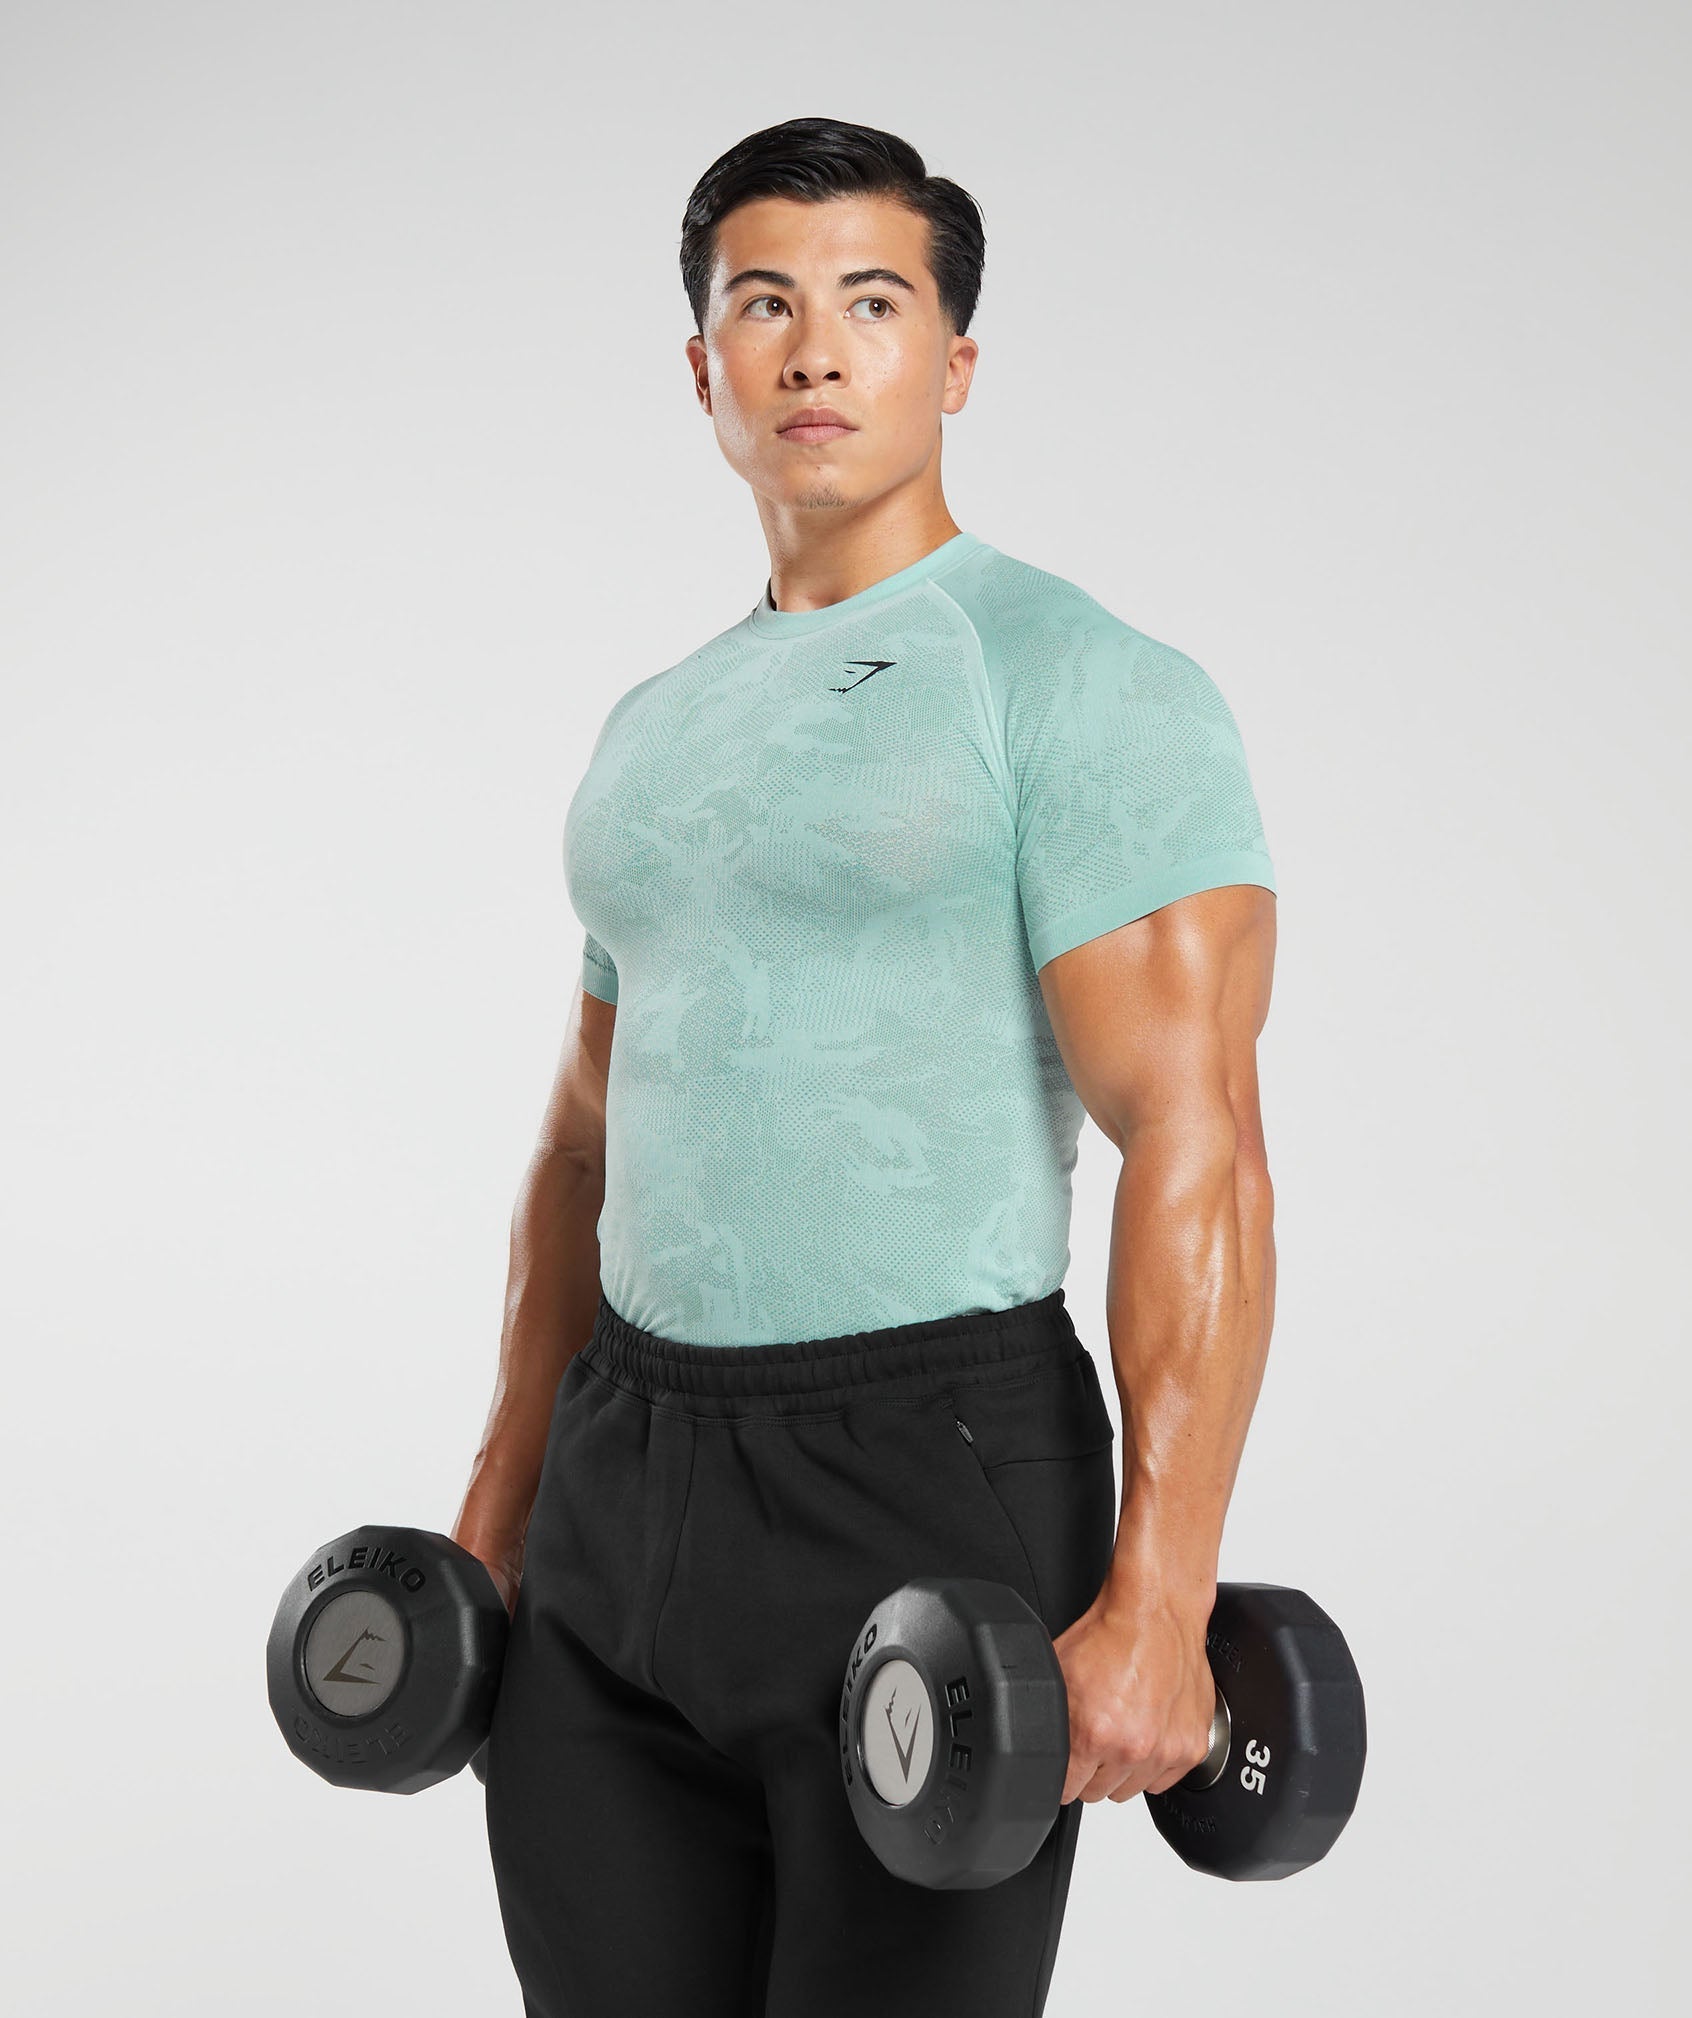 Gym T-Shirts, Training Tops, Seamless T Shirts, Fitness T-Shirts, Gymshark